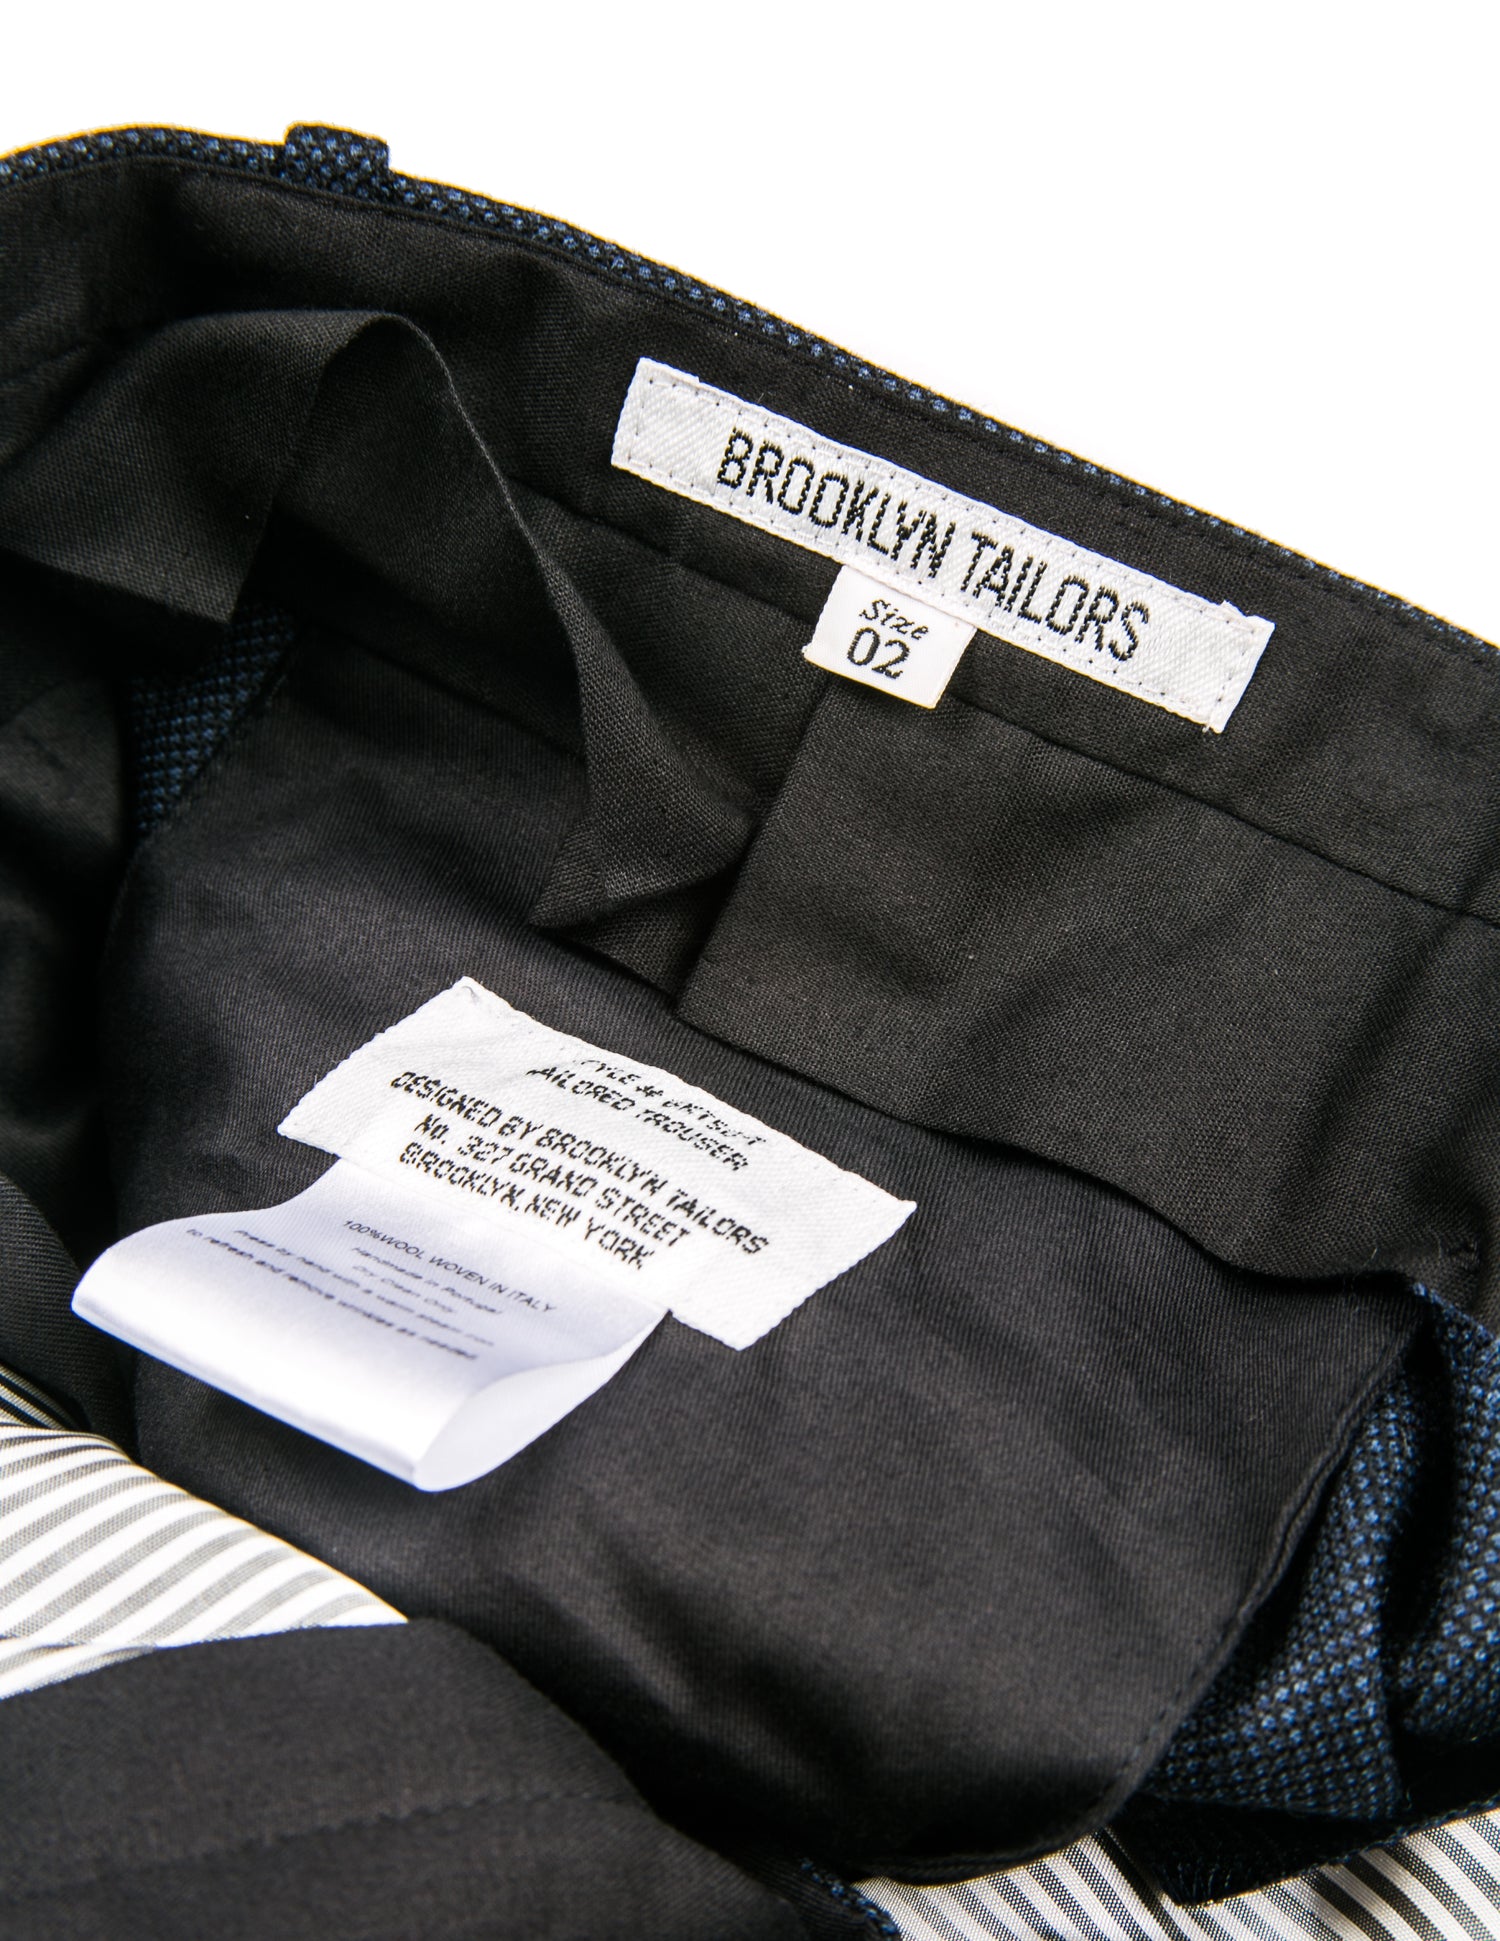 Detail of BKT50 Tailored Trouser in Birdseye Weave - Navy showing labels